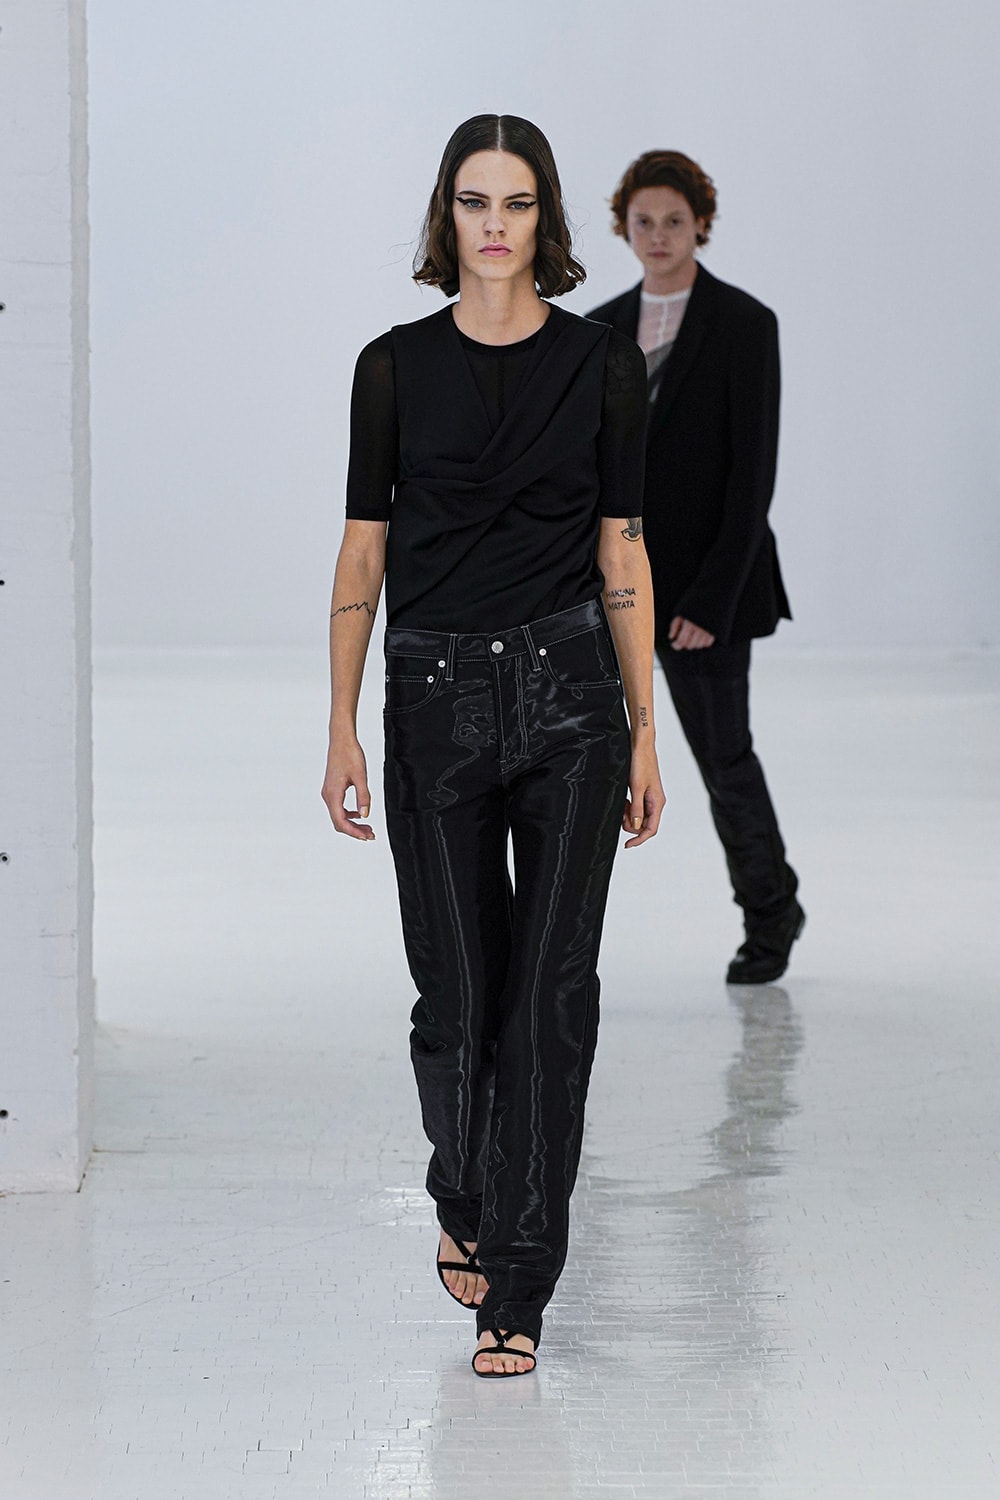 Helmut Lang SS20 Runway Collection New York Fashion Week NYFW Unisex Men Women MARK THOMAS Spring/Summer 2020 outerwear denim jeans translucent pieces